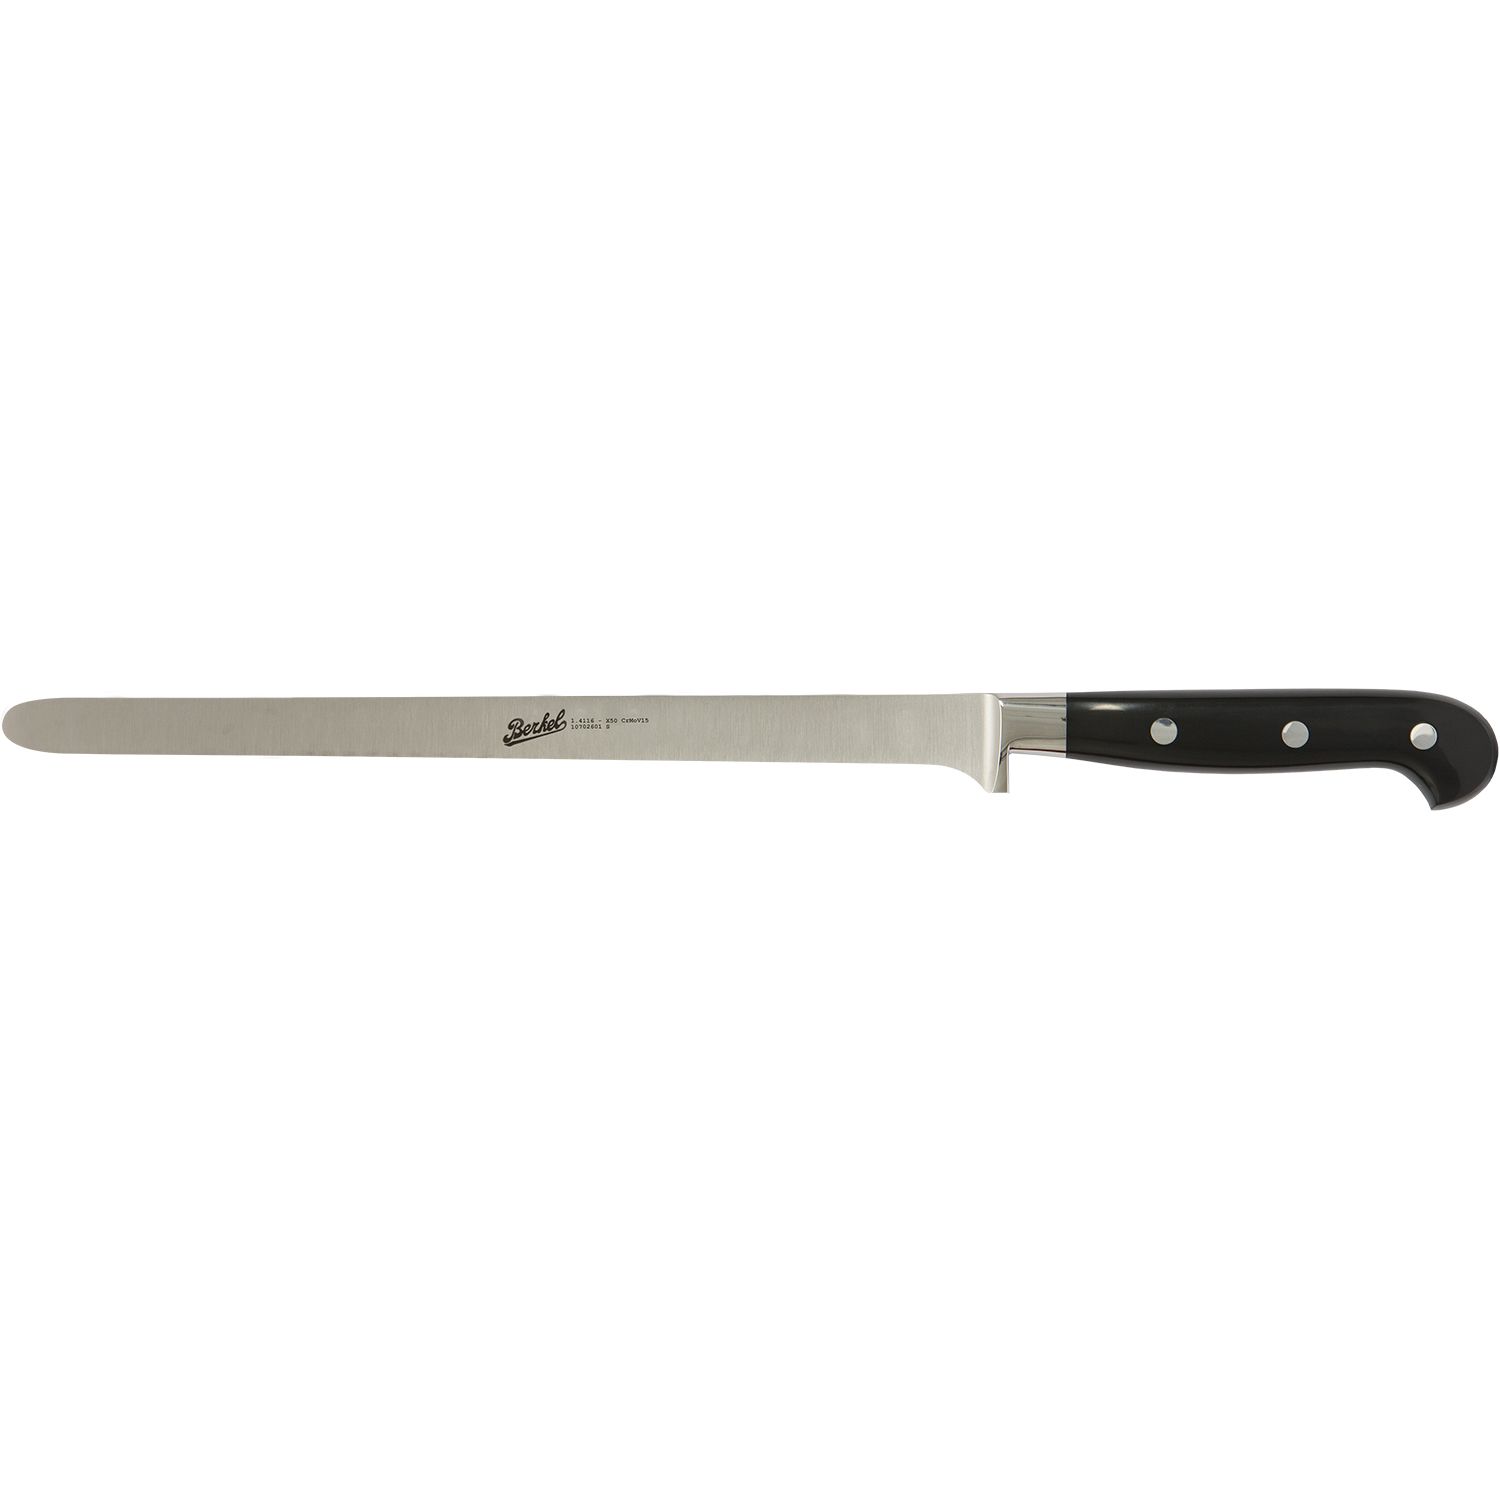 Ham knife cm.26  Stainless Steel Berkel Adhoc Handle Glossy Black Resin